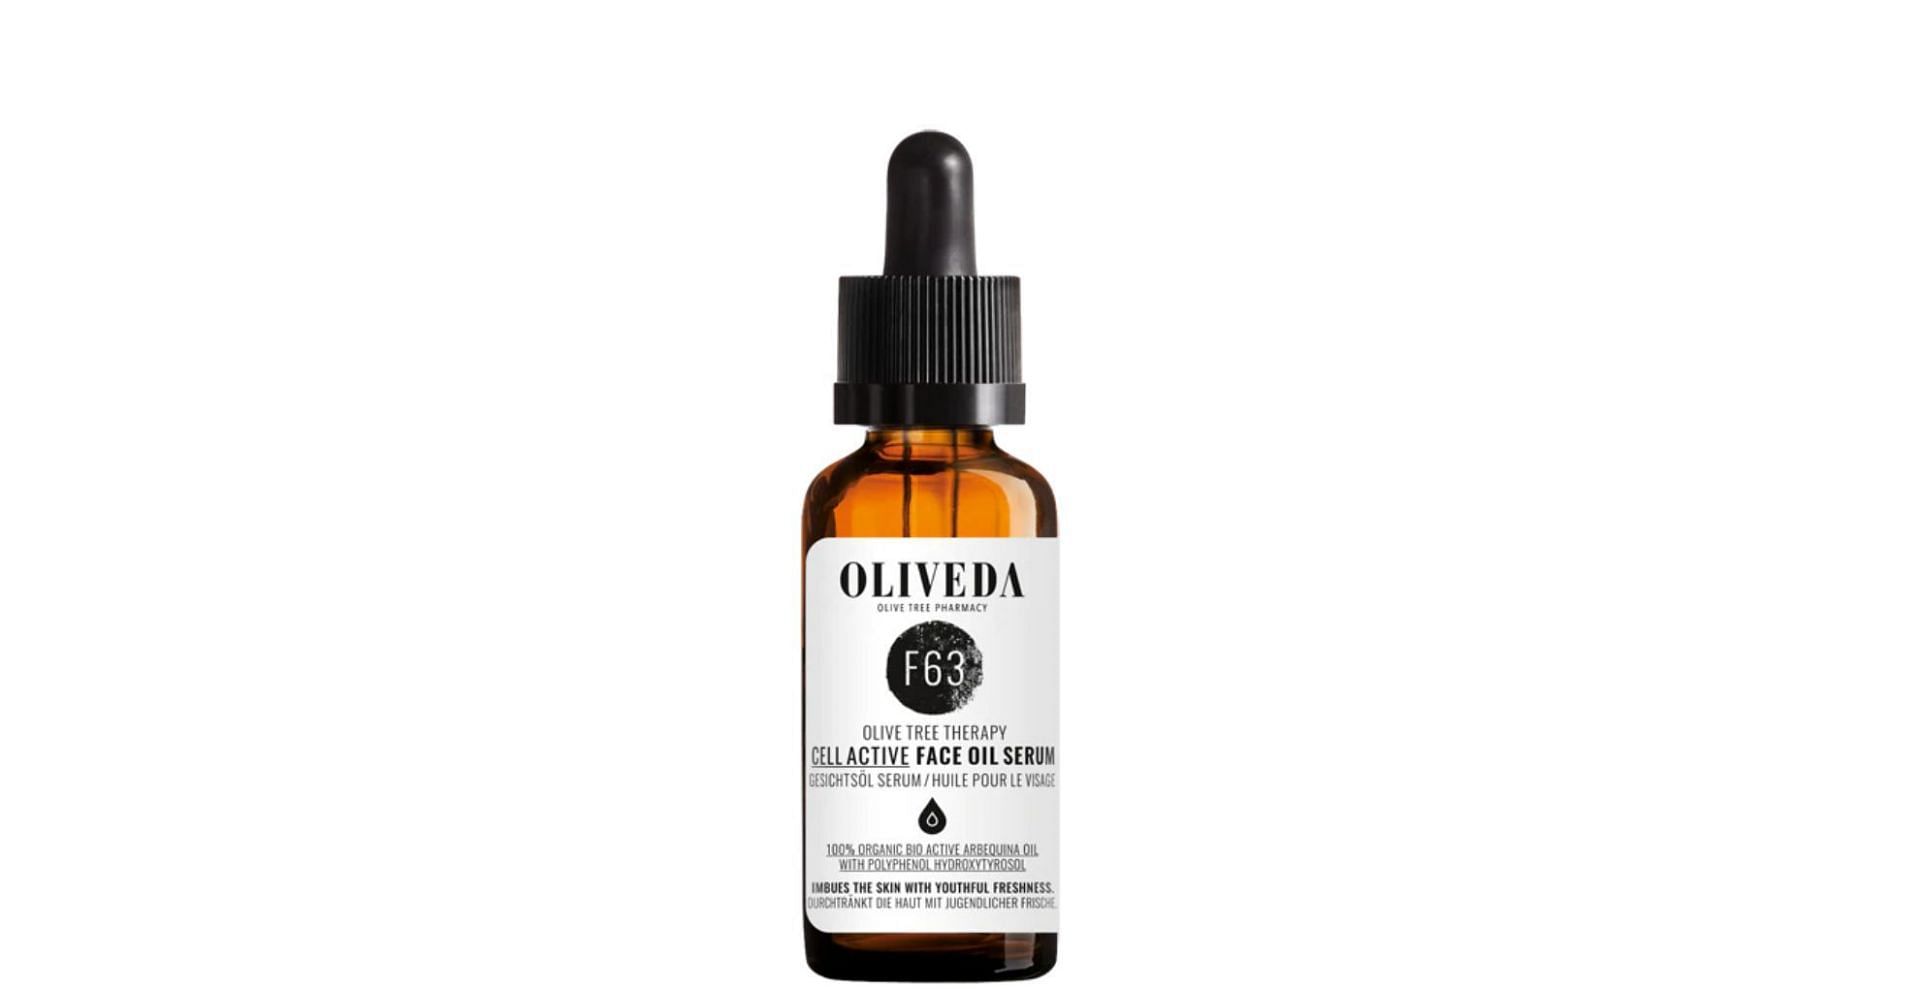 Oliveda Cell active face oil serum (Image Via: Olivetree people website)